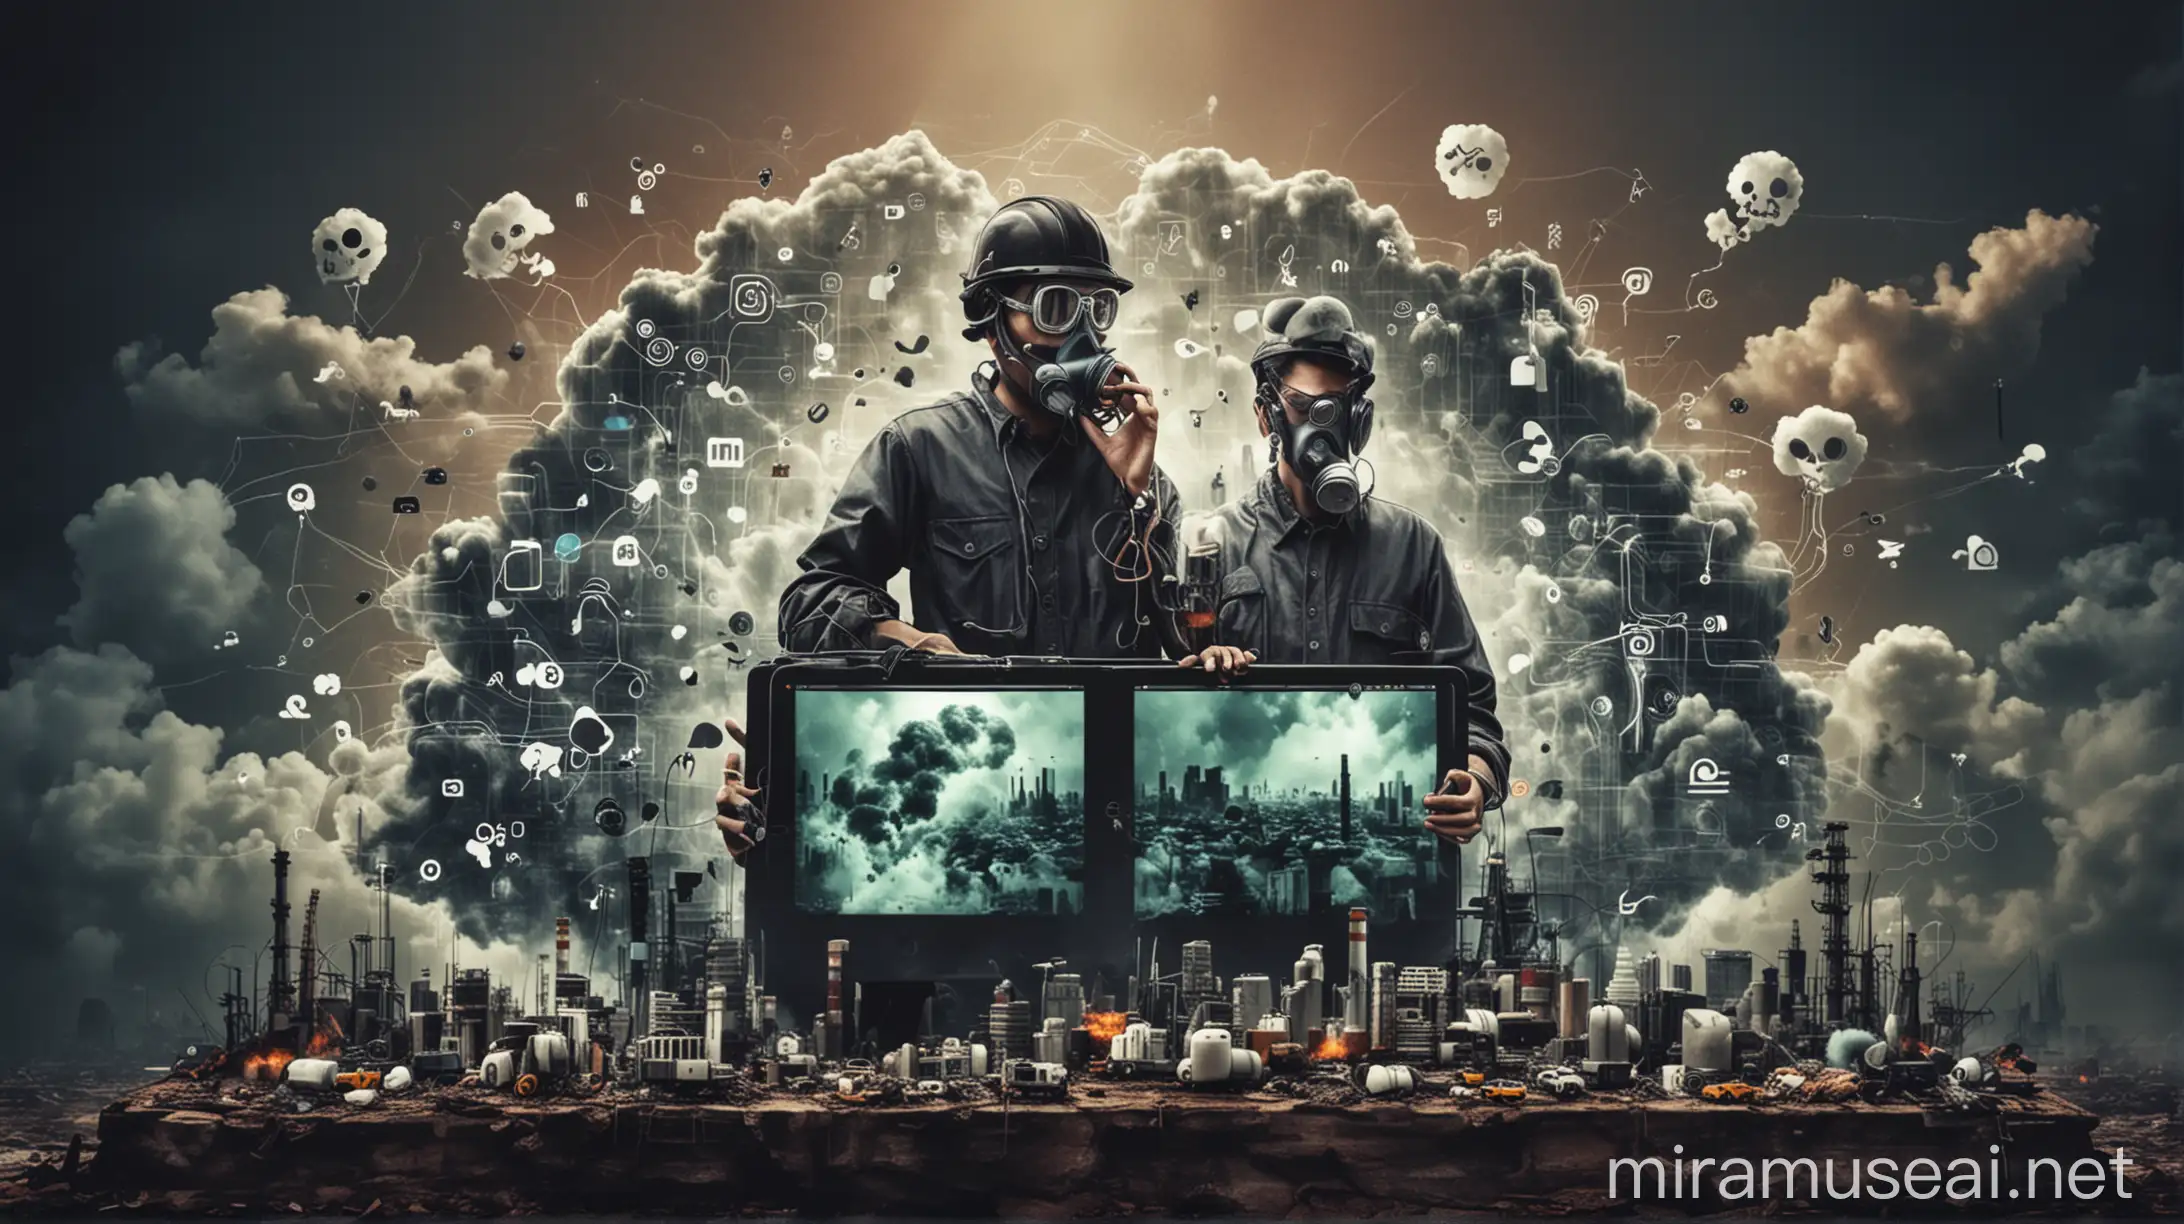 Digital Pollution Artist Depicts Social Media Icons Amidst Pollution